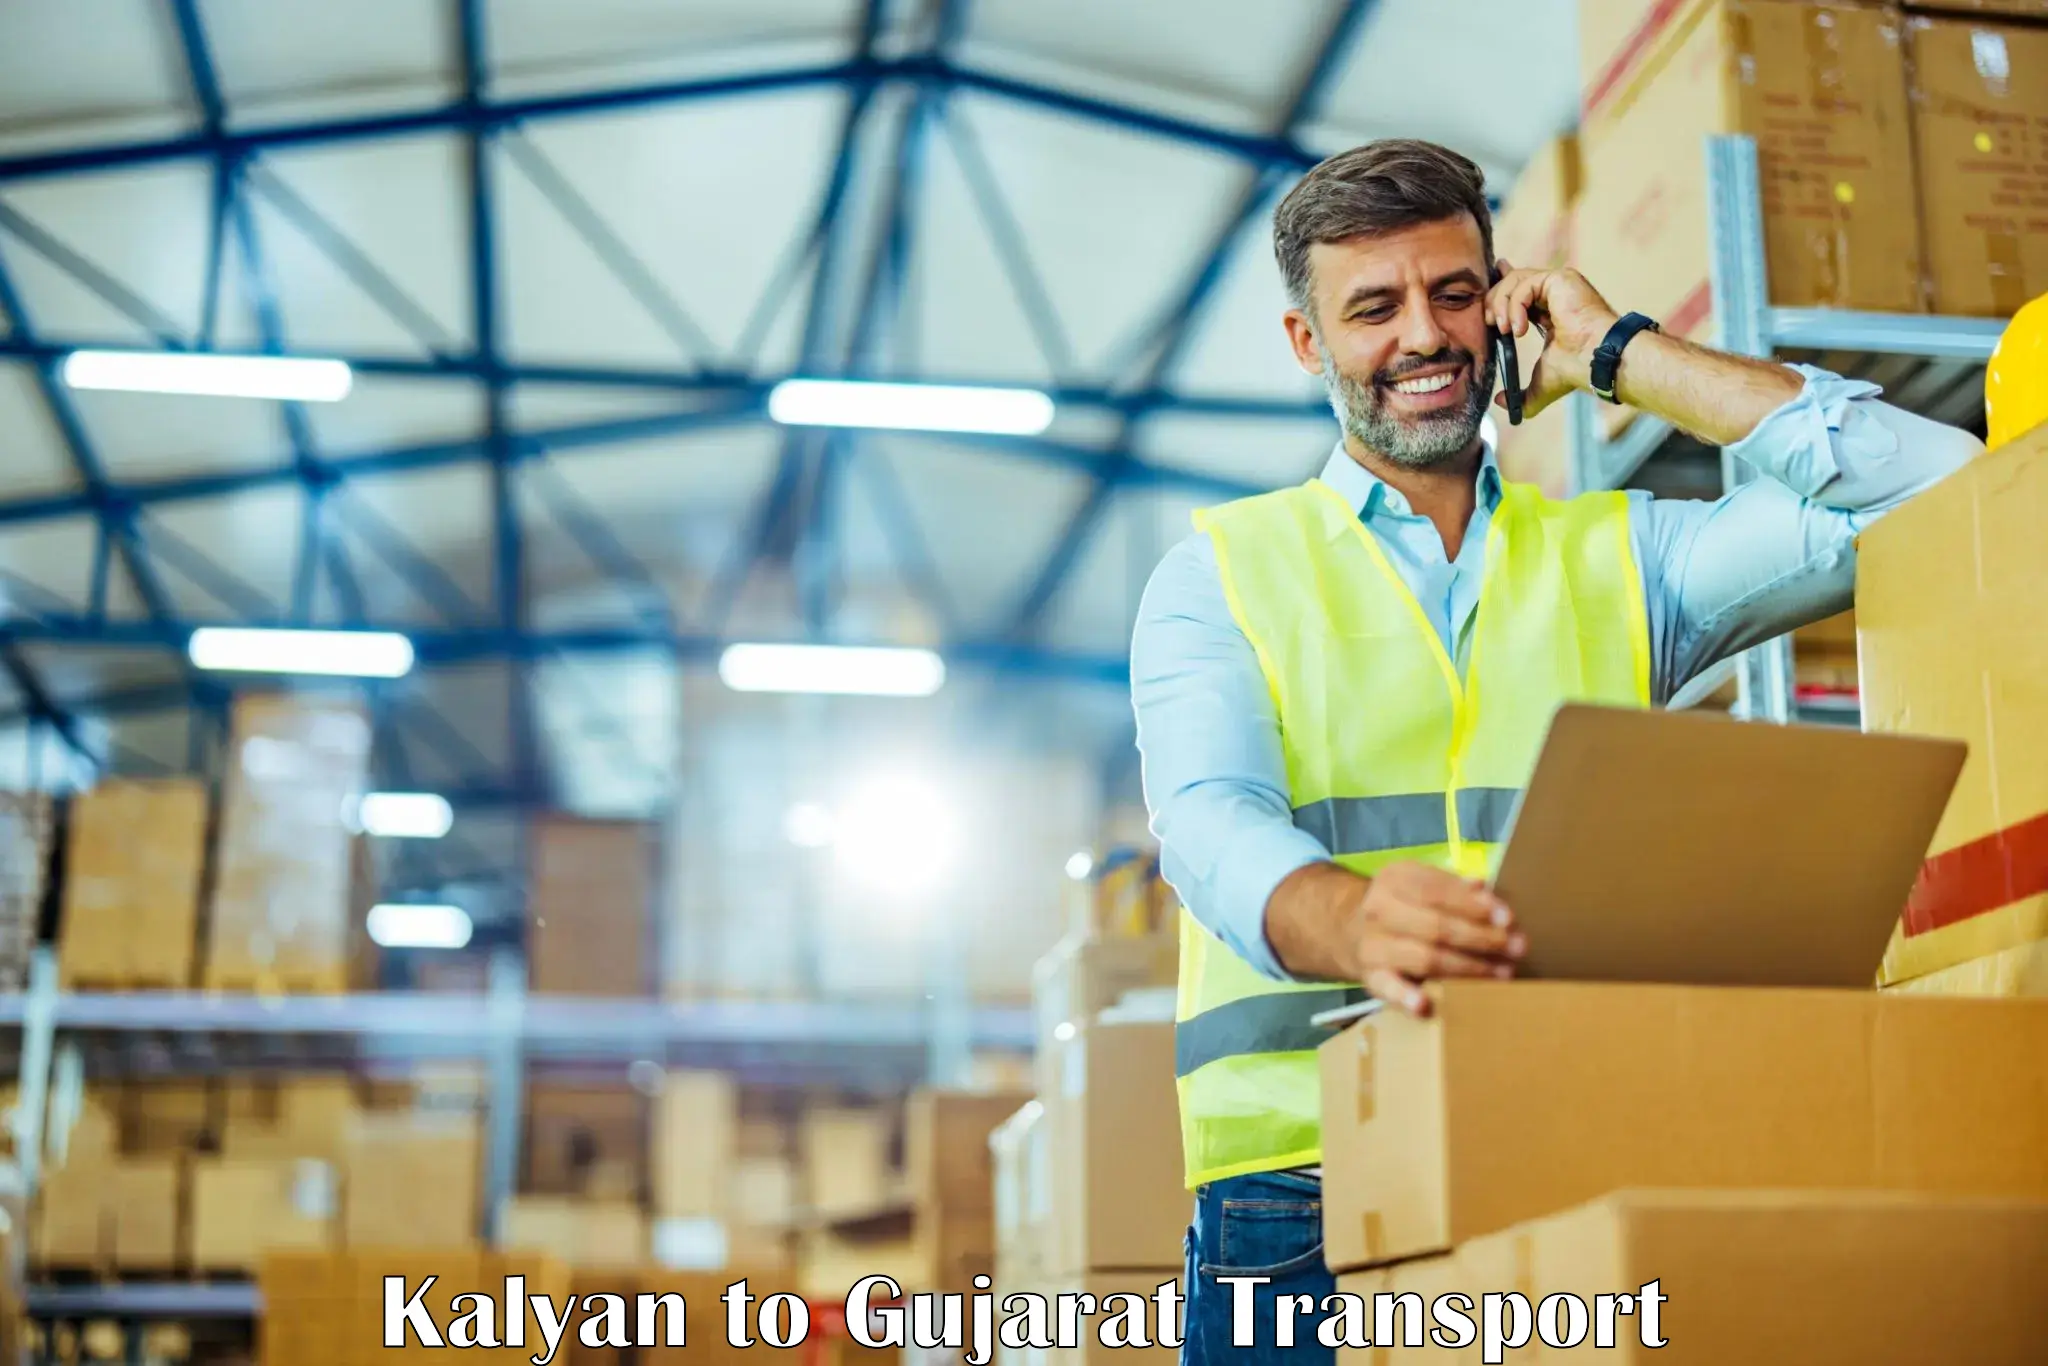 Delivery service Kalyan to Gujarat